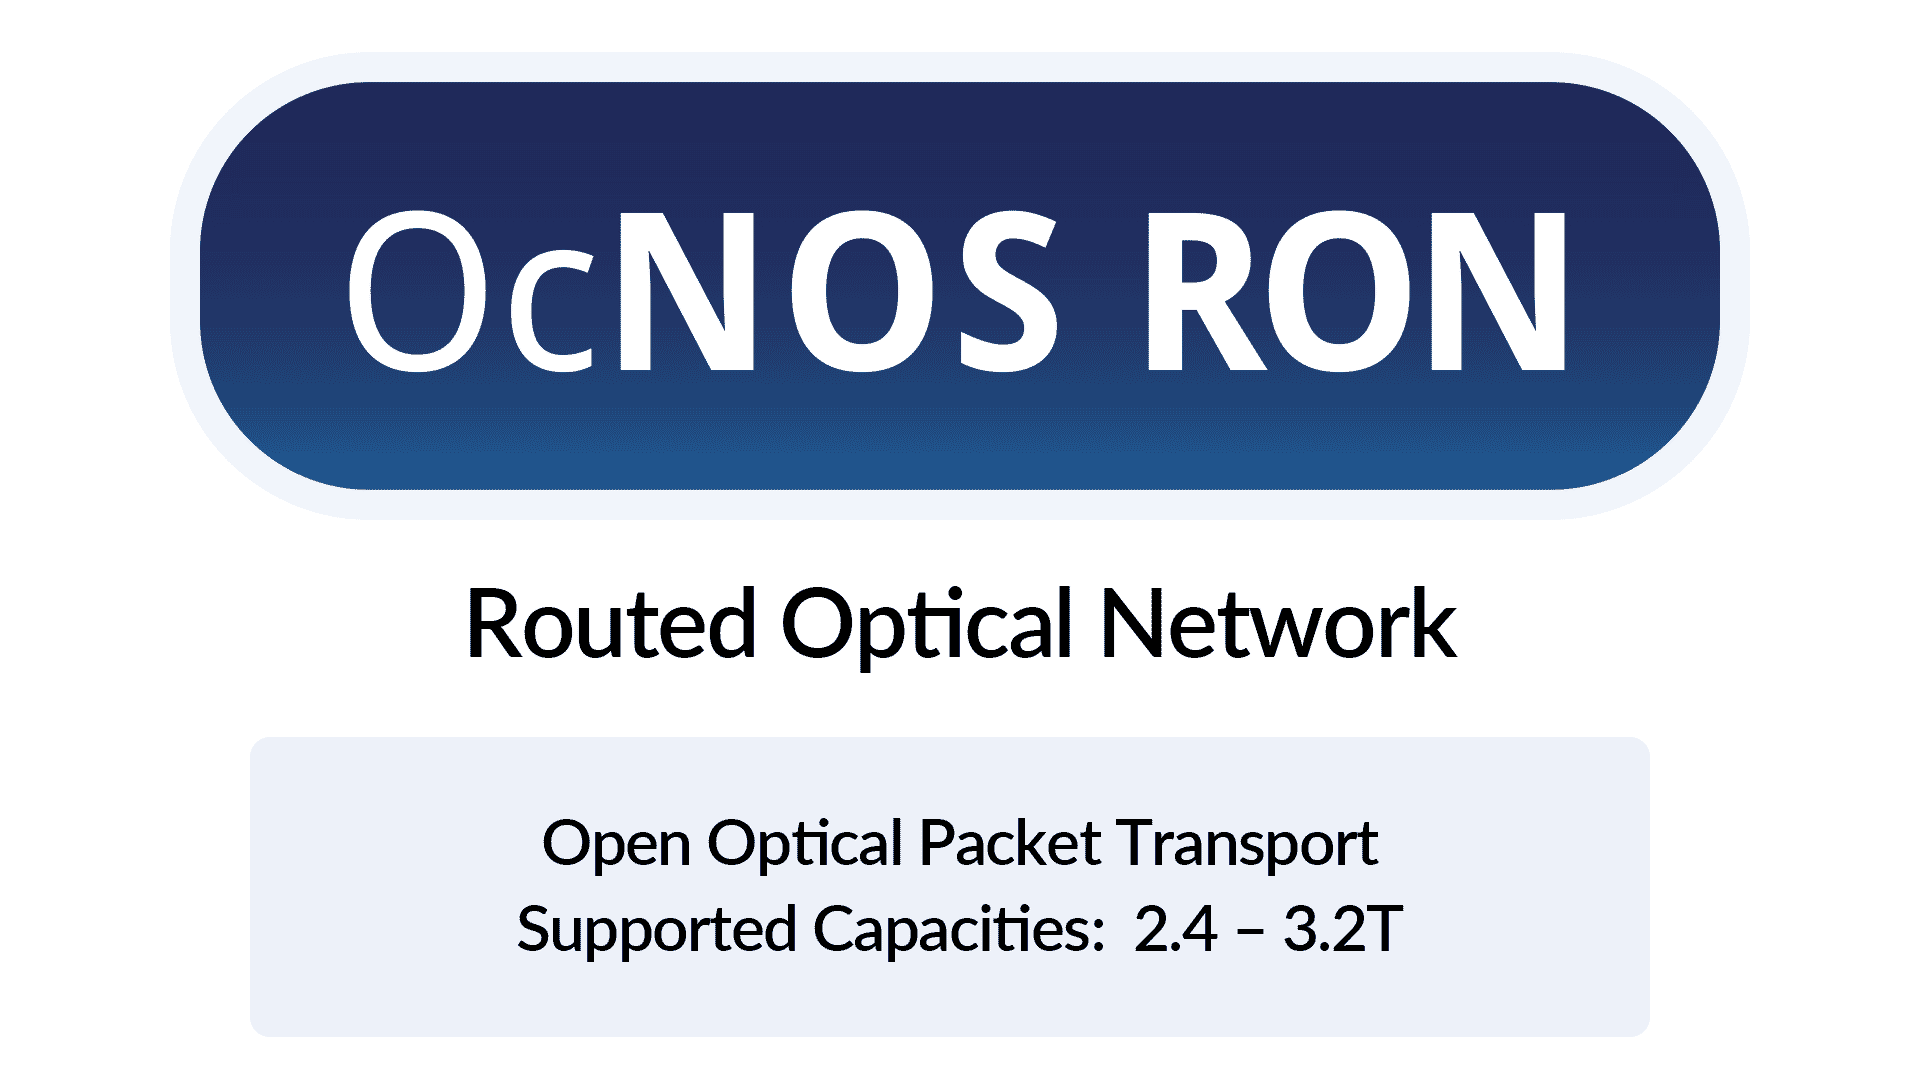 OcNOS RON software features